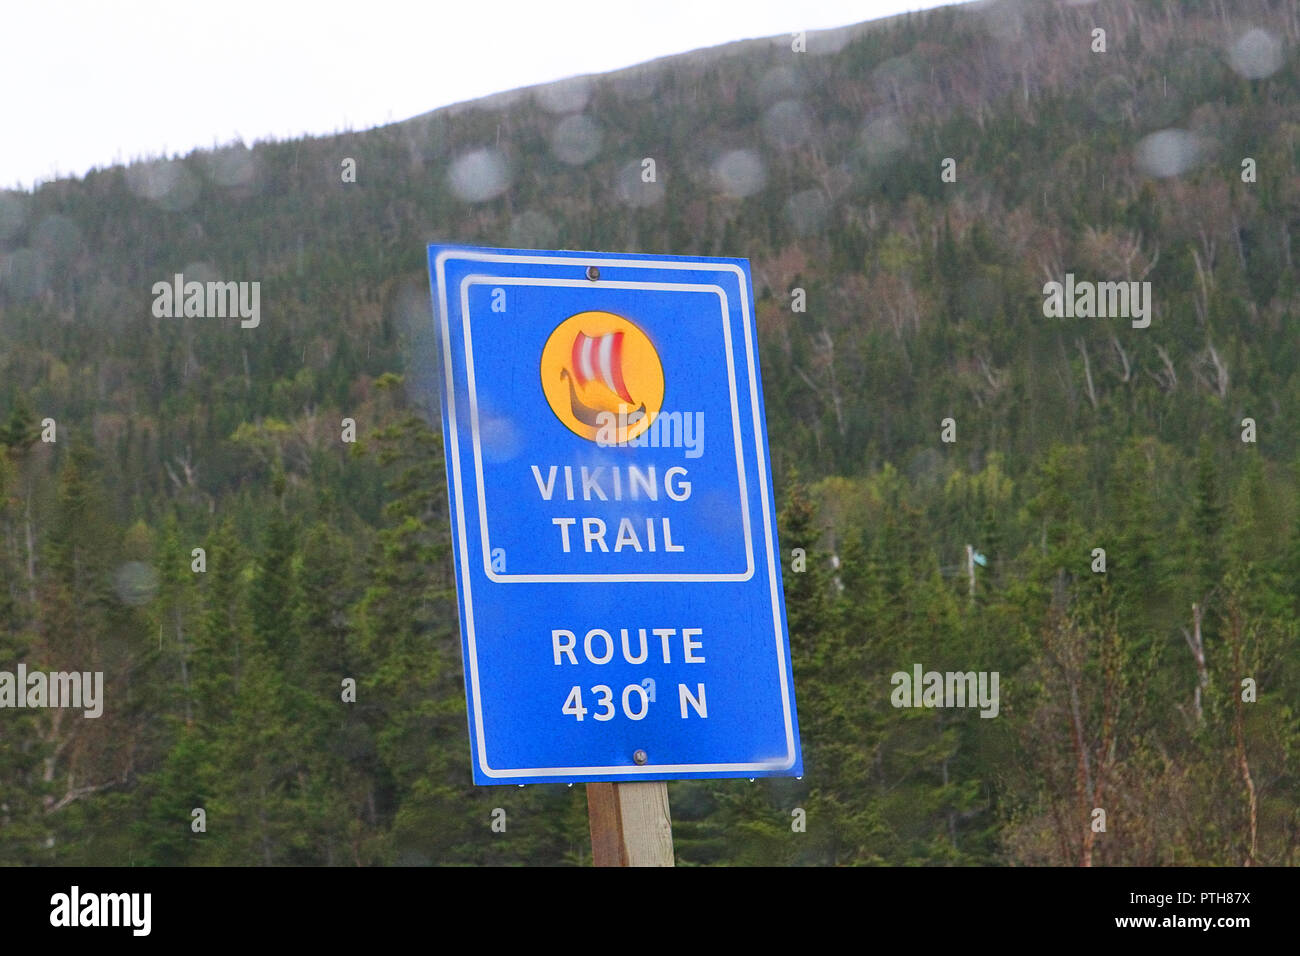 Viking Trail, Route 430 N, Newfounland, Canada Stock Photo